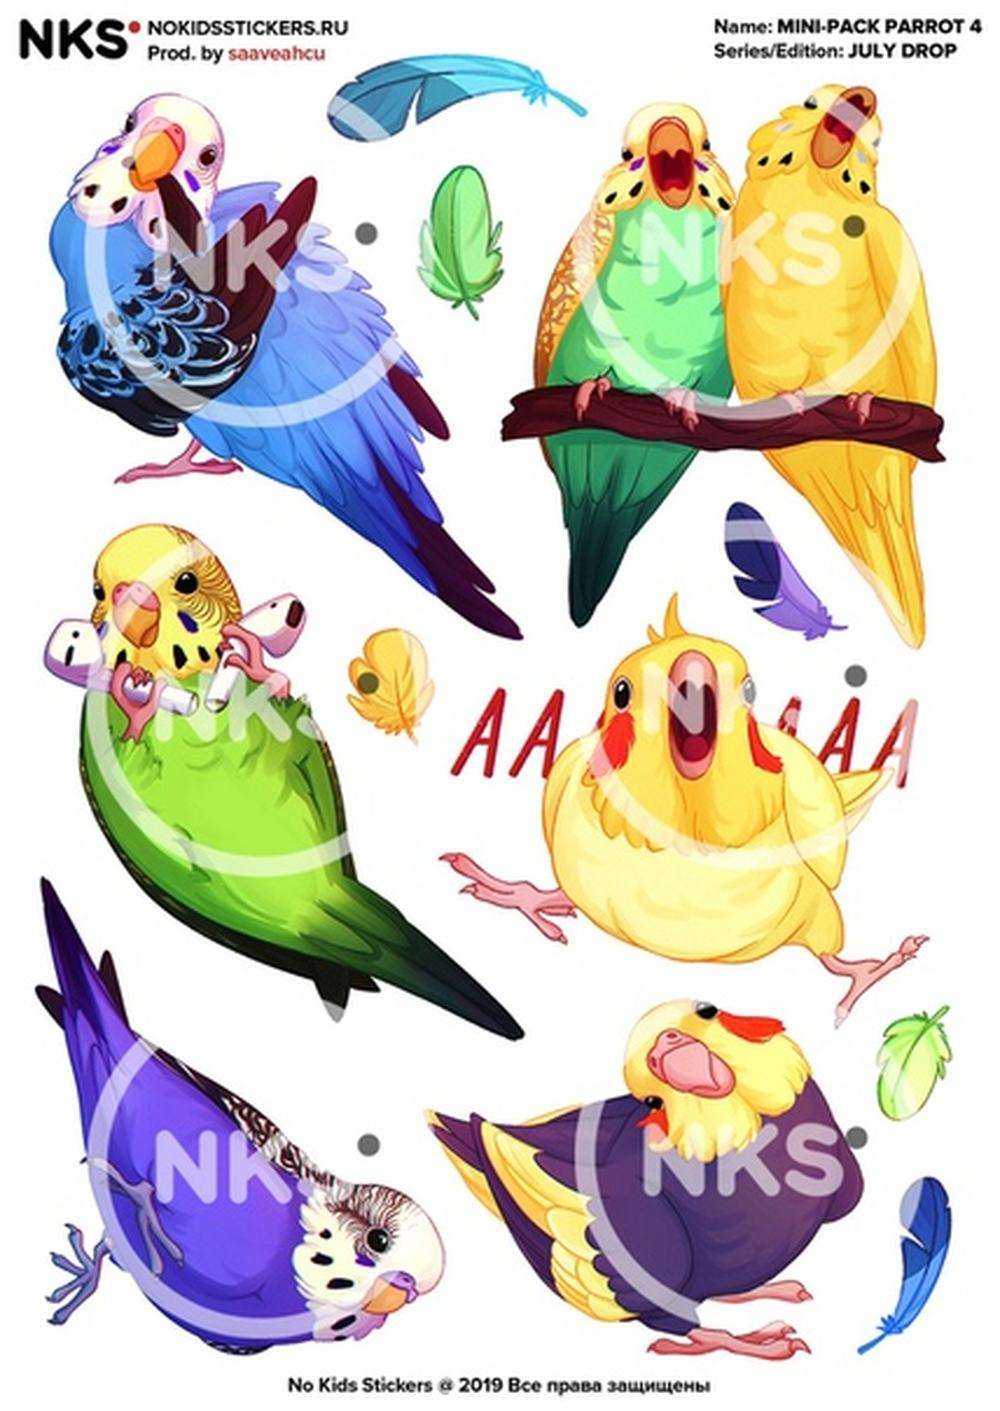 Стикеры NKS mini Parrot 4 Попугаи